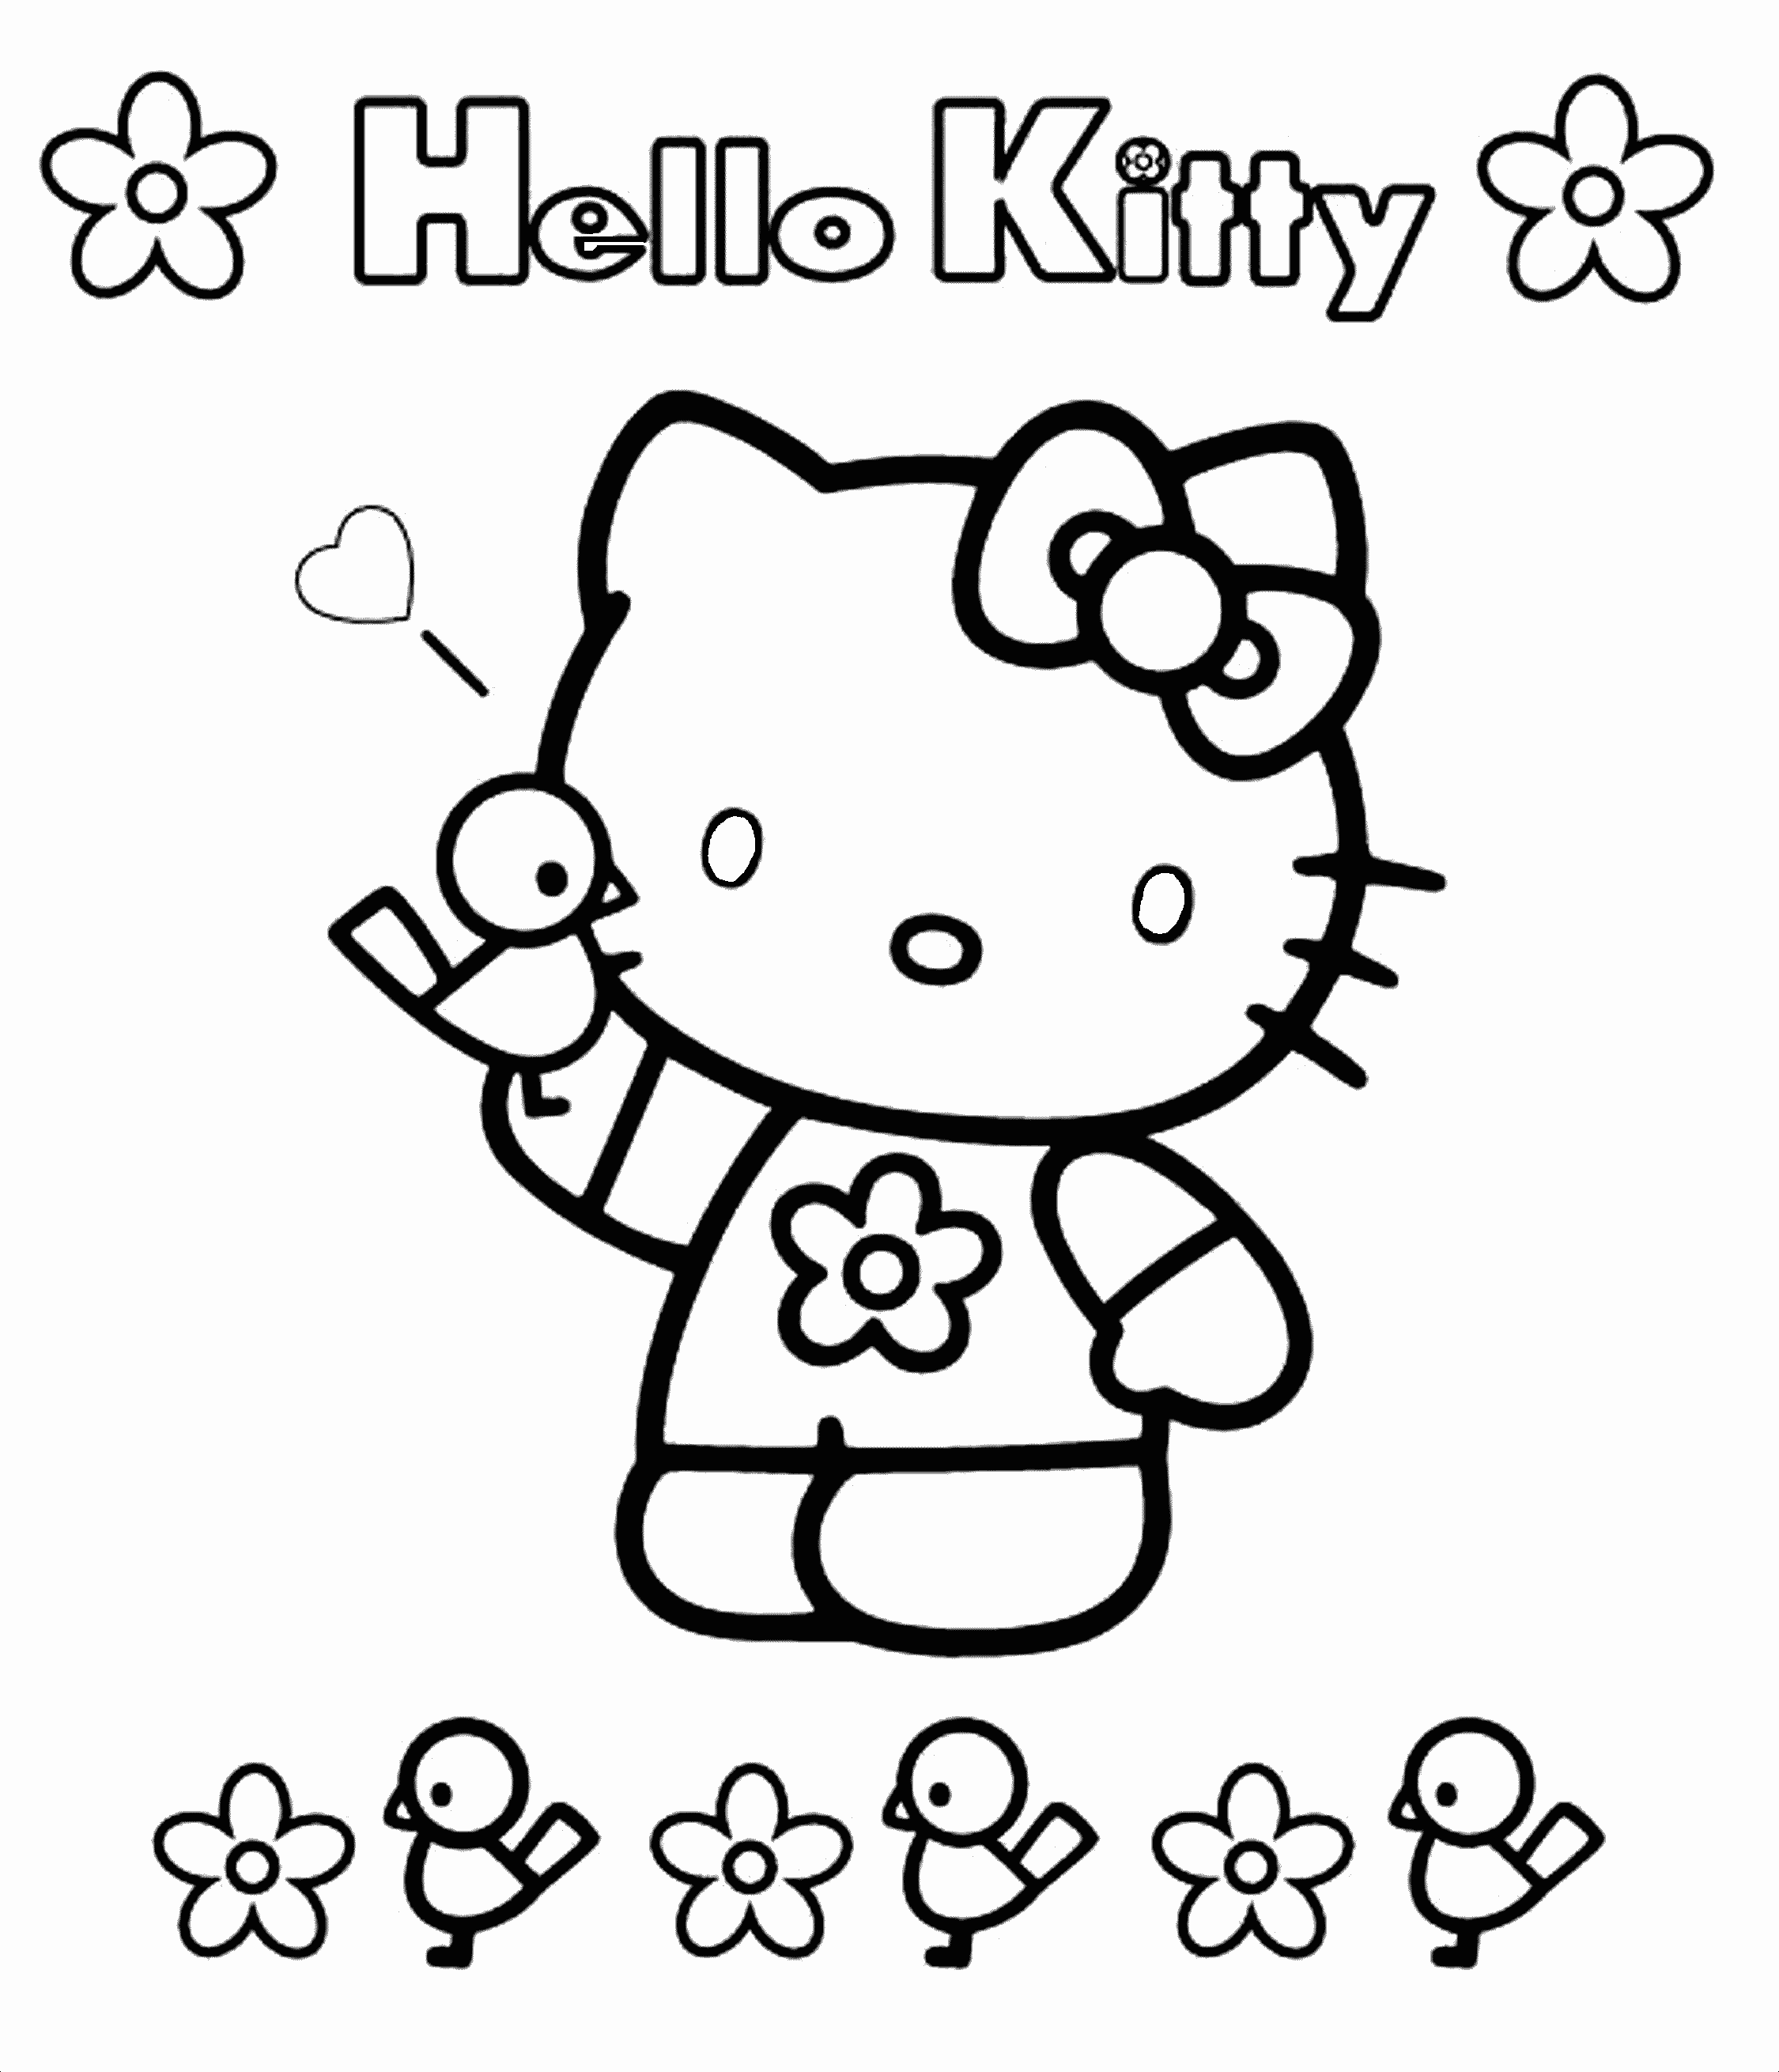 printable coloring pages hello kitty hello kitty coloring pages getcoloringpagescom pages coloring hello printable kitty 